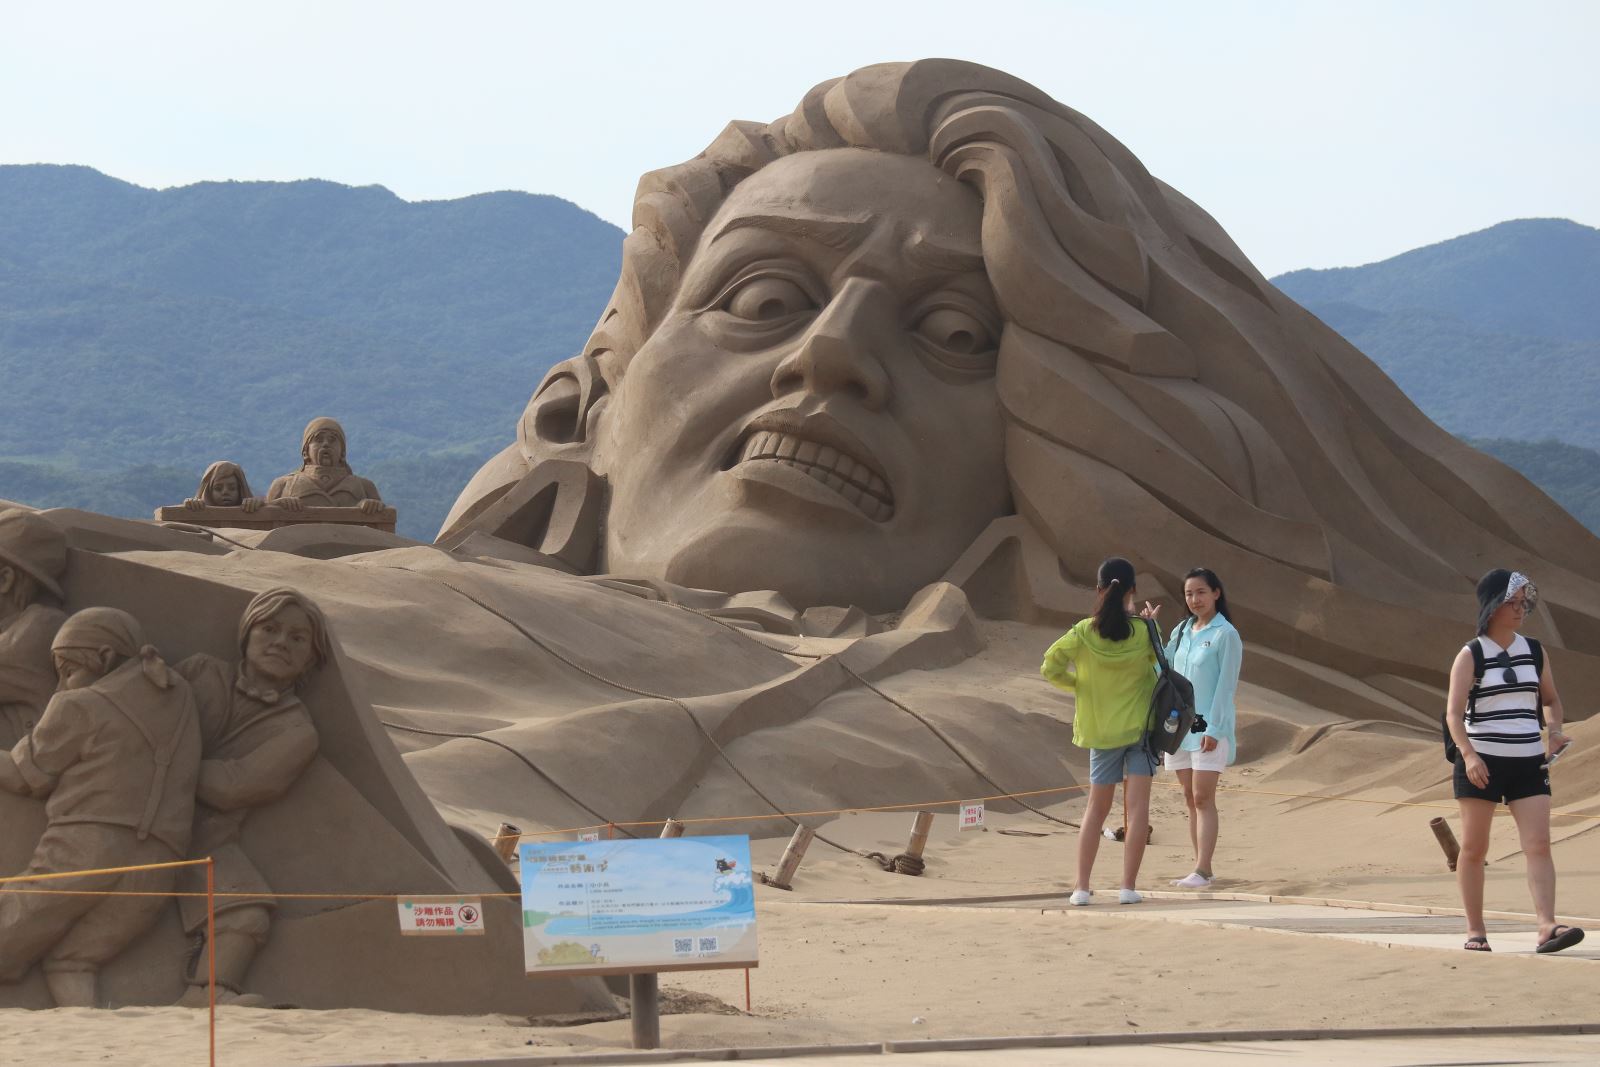 Theme sand sculpture giant